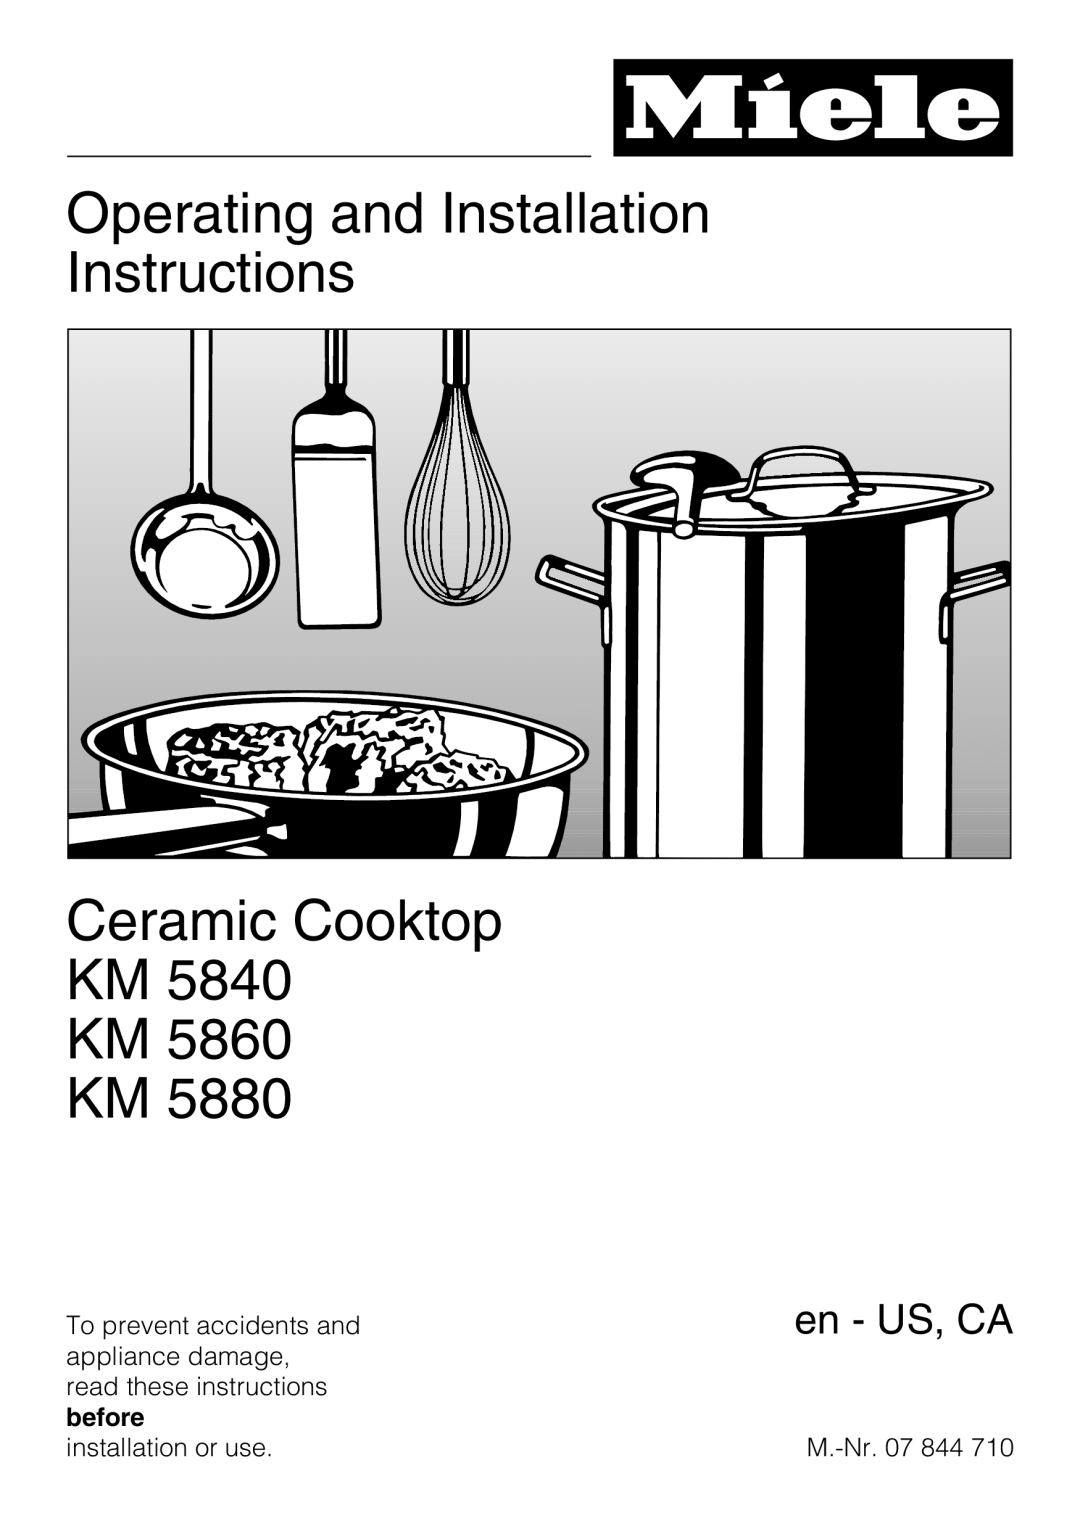 Miele KM 5880 installation instructions Operating and Installation Instructions, Ceramic Cooktop KM KM KM, en - US, CA 